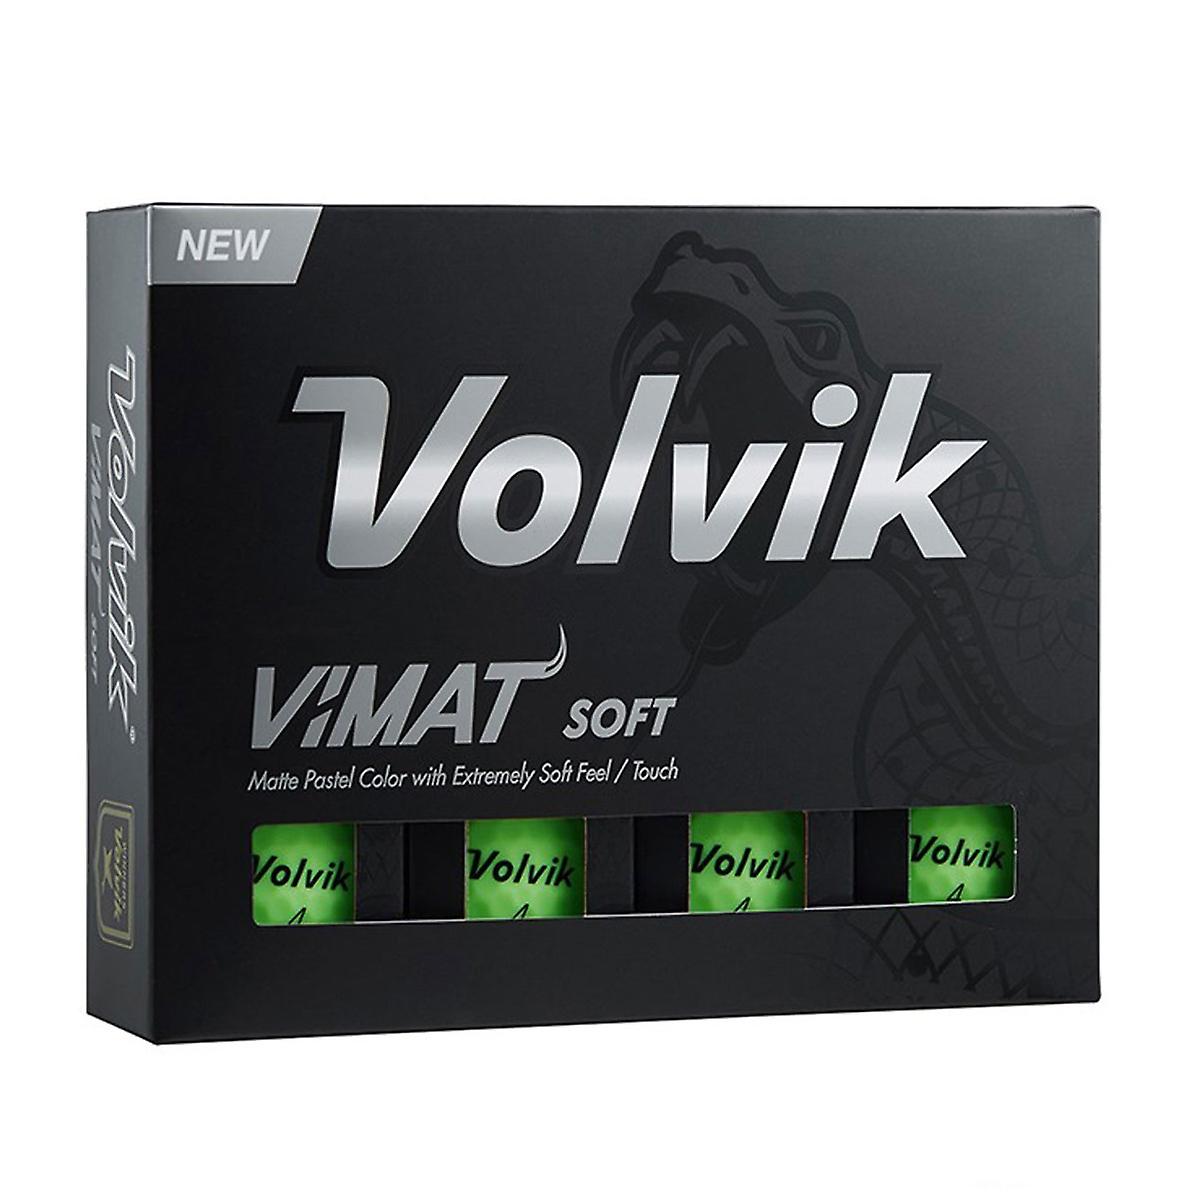 VOLVIK VIMAT SOFT GOLF BALLS 12 PACK